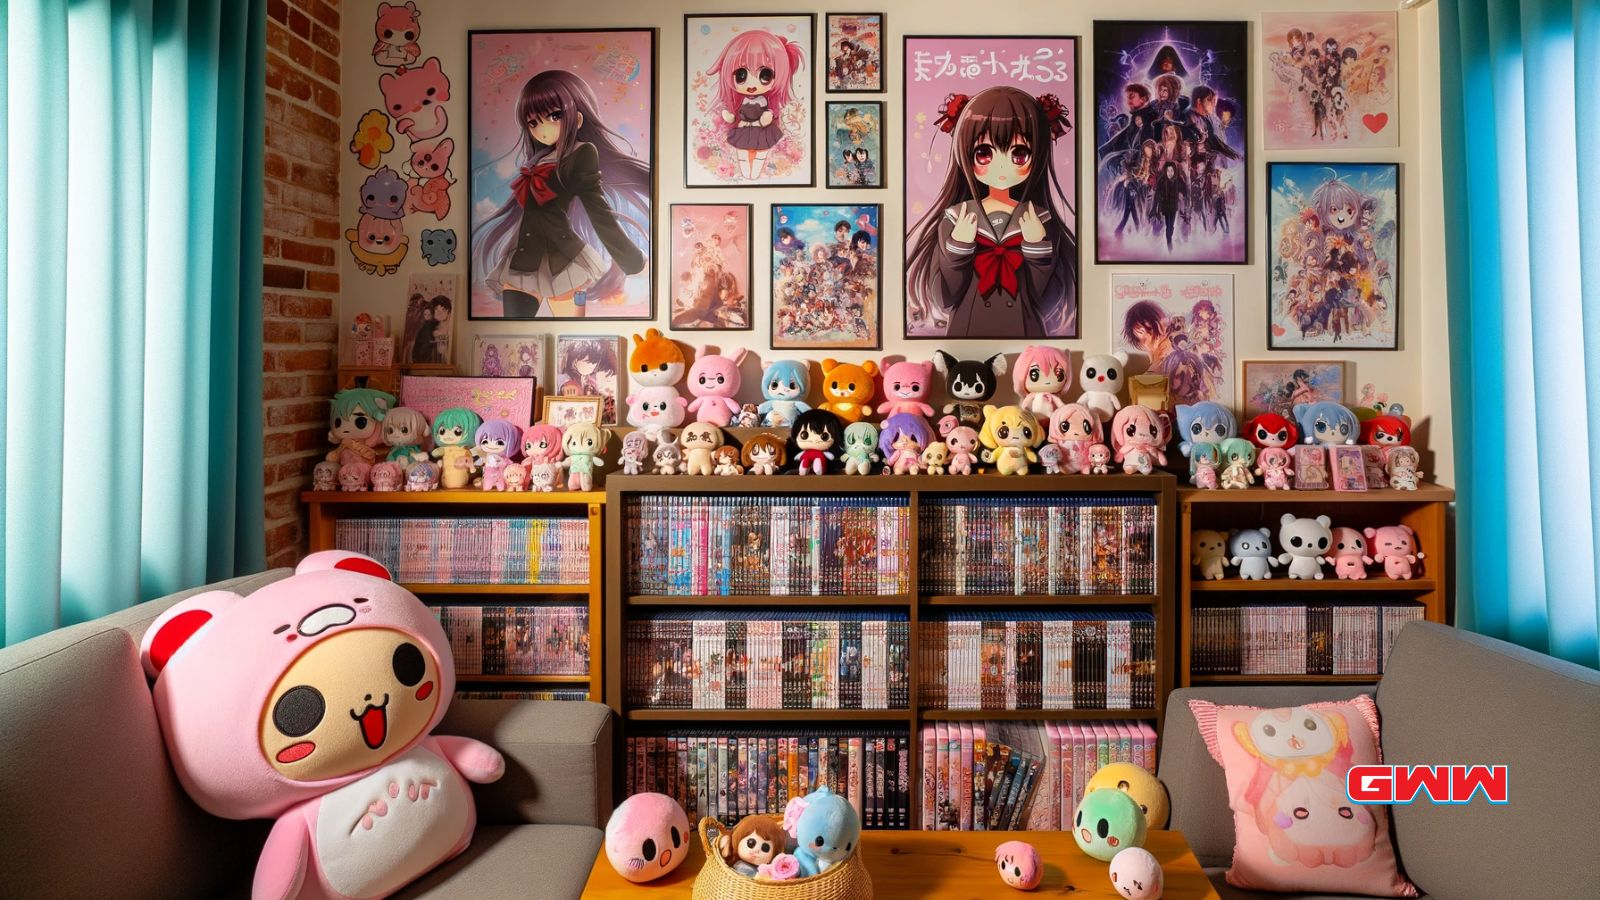 Kawaii anime-themed room with plush toys and posters